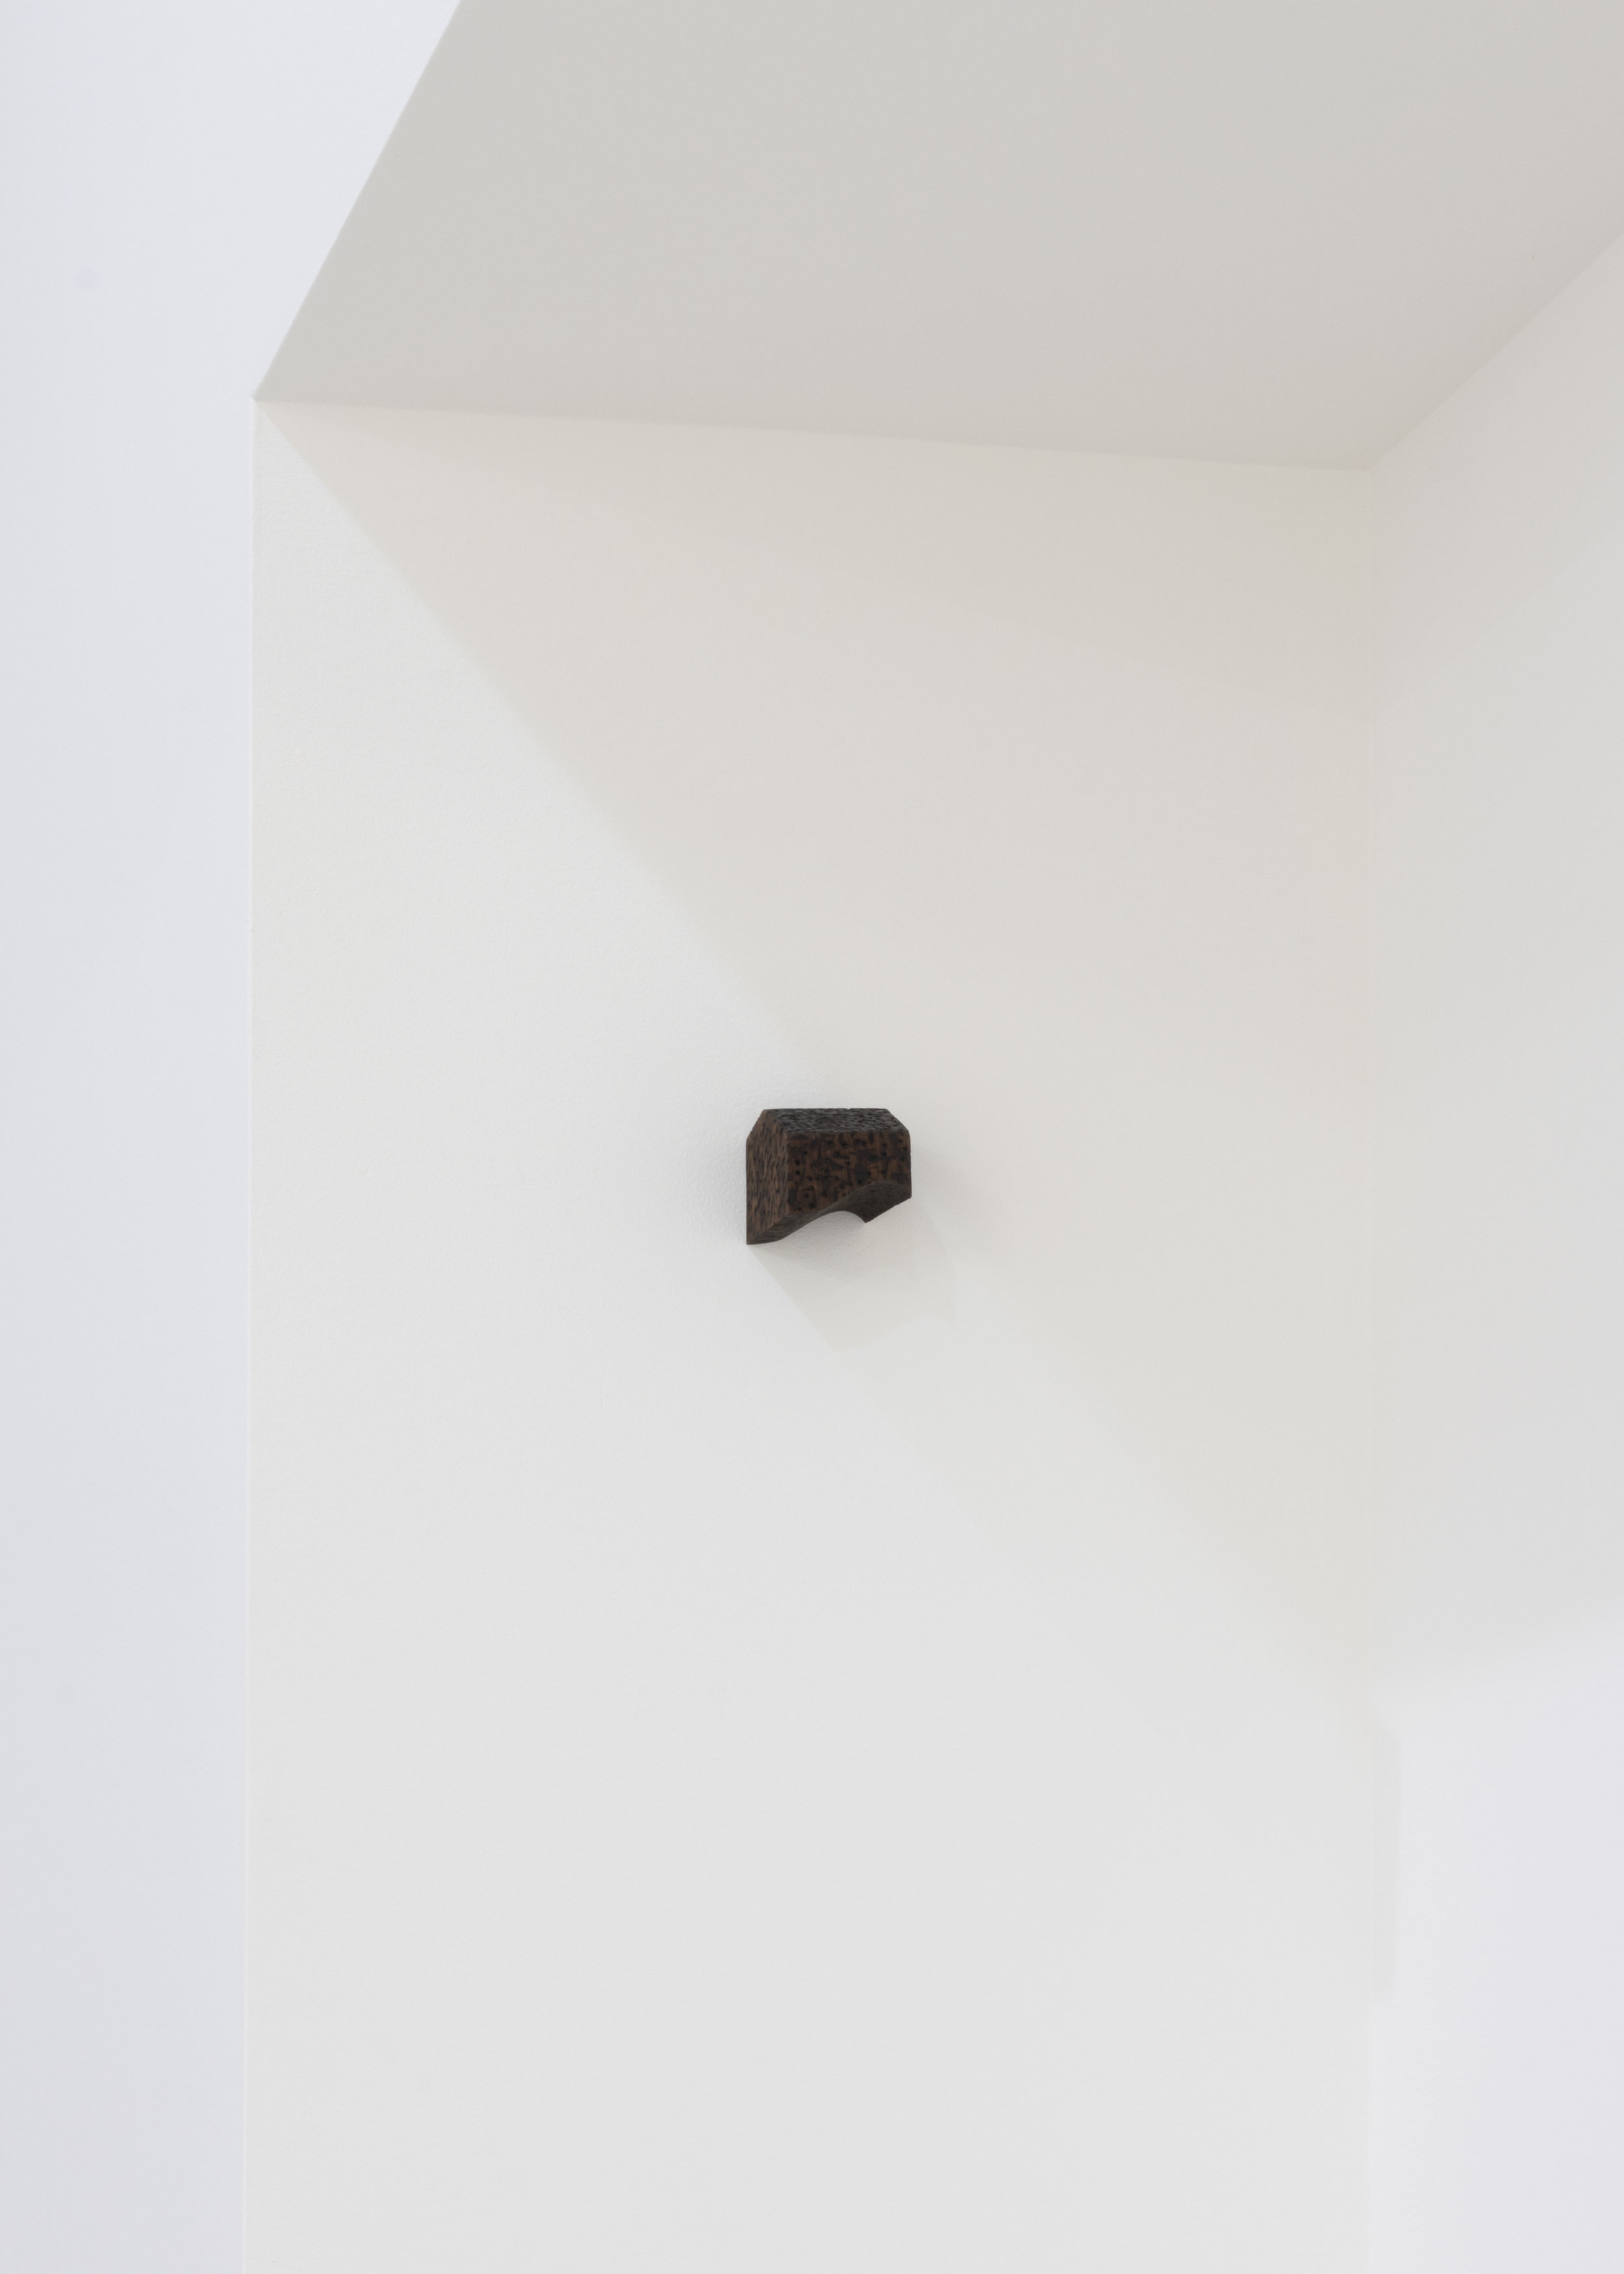  Zach Meisner, Untitled, 2018, waxed walnut, 2 x 2 x 3 in. 